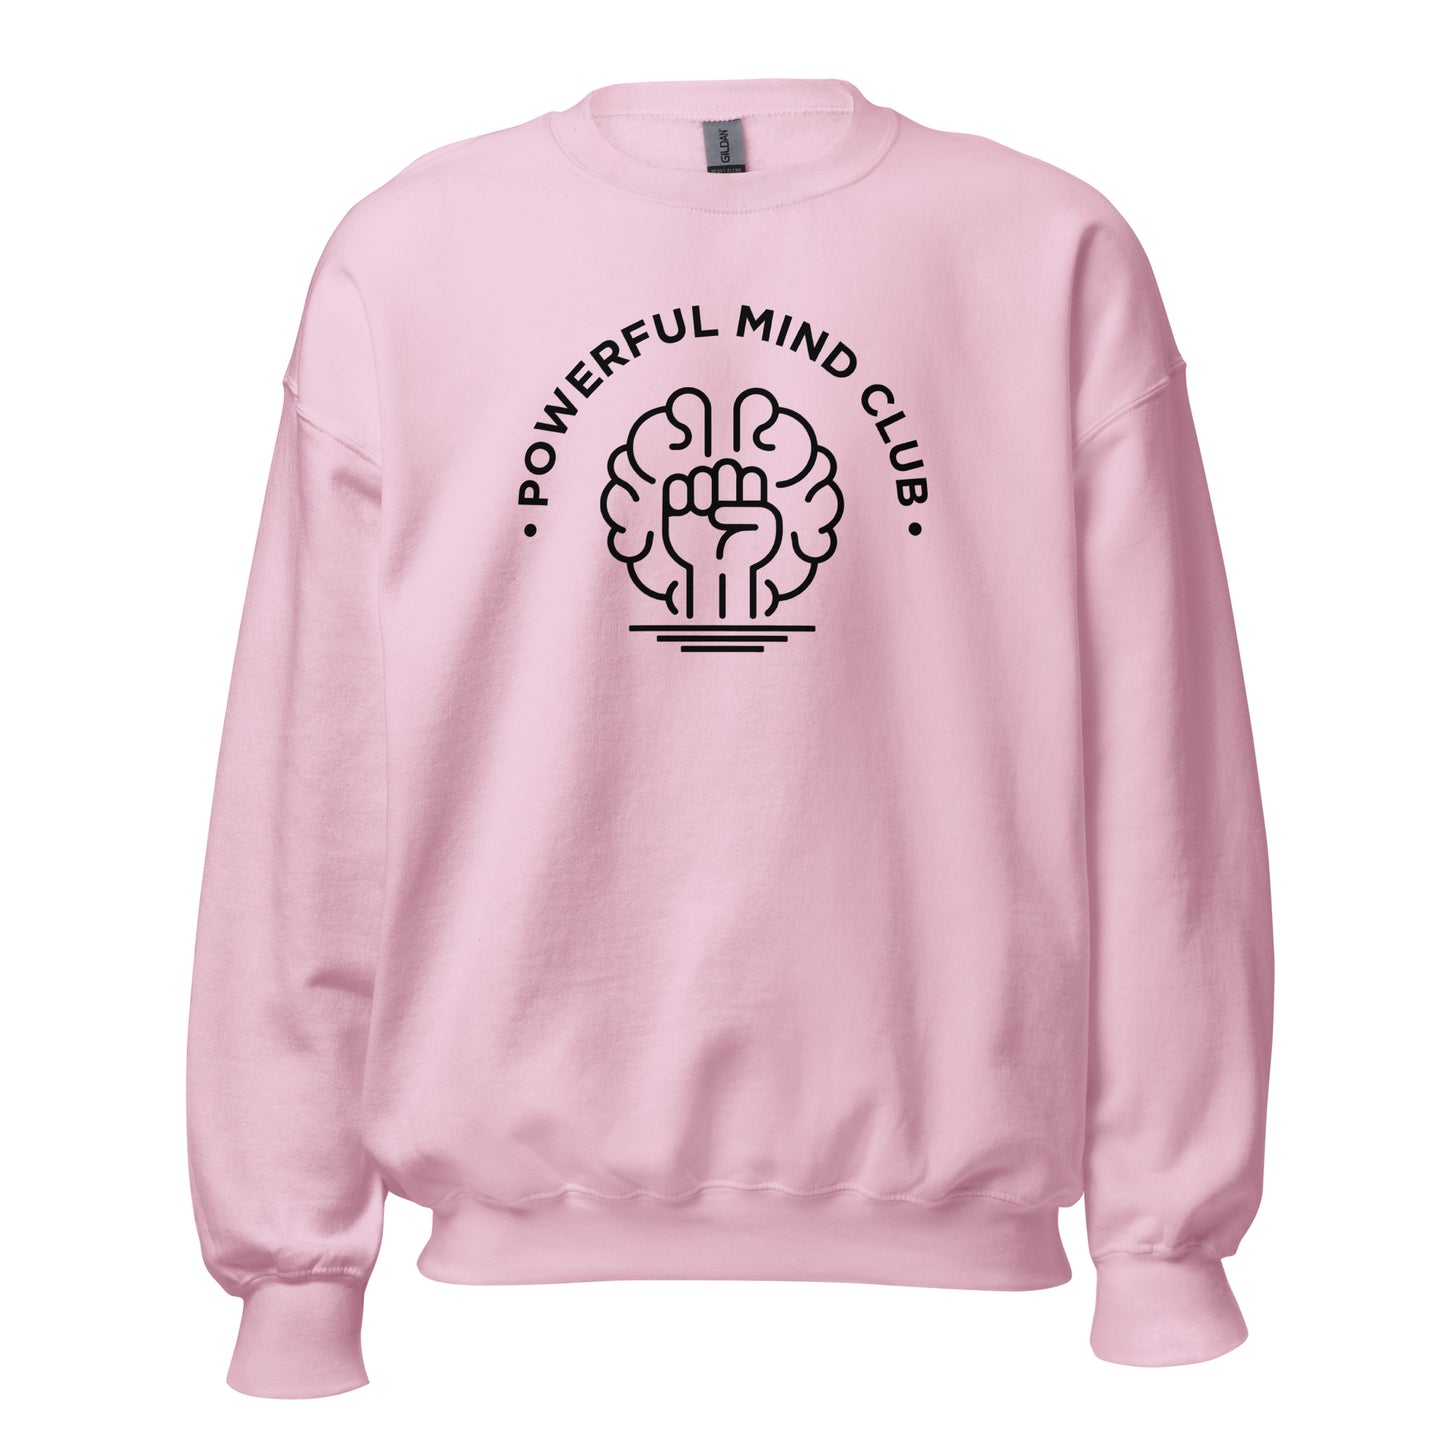 Powerful Mind Club™ Crewneck Sweatshirt